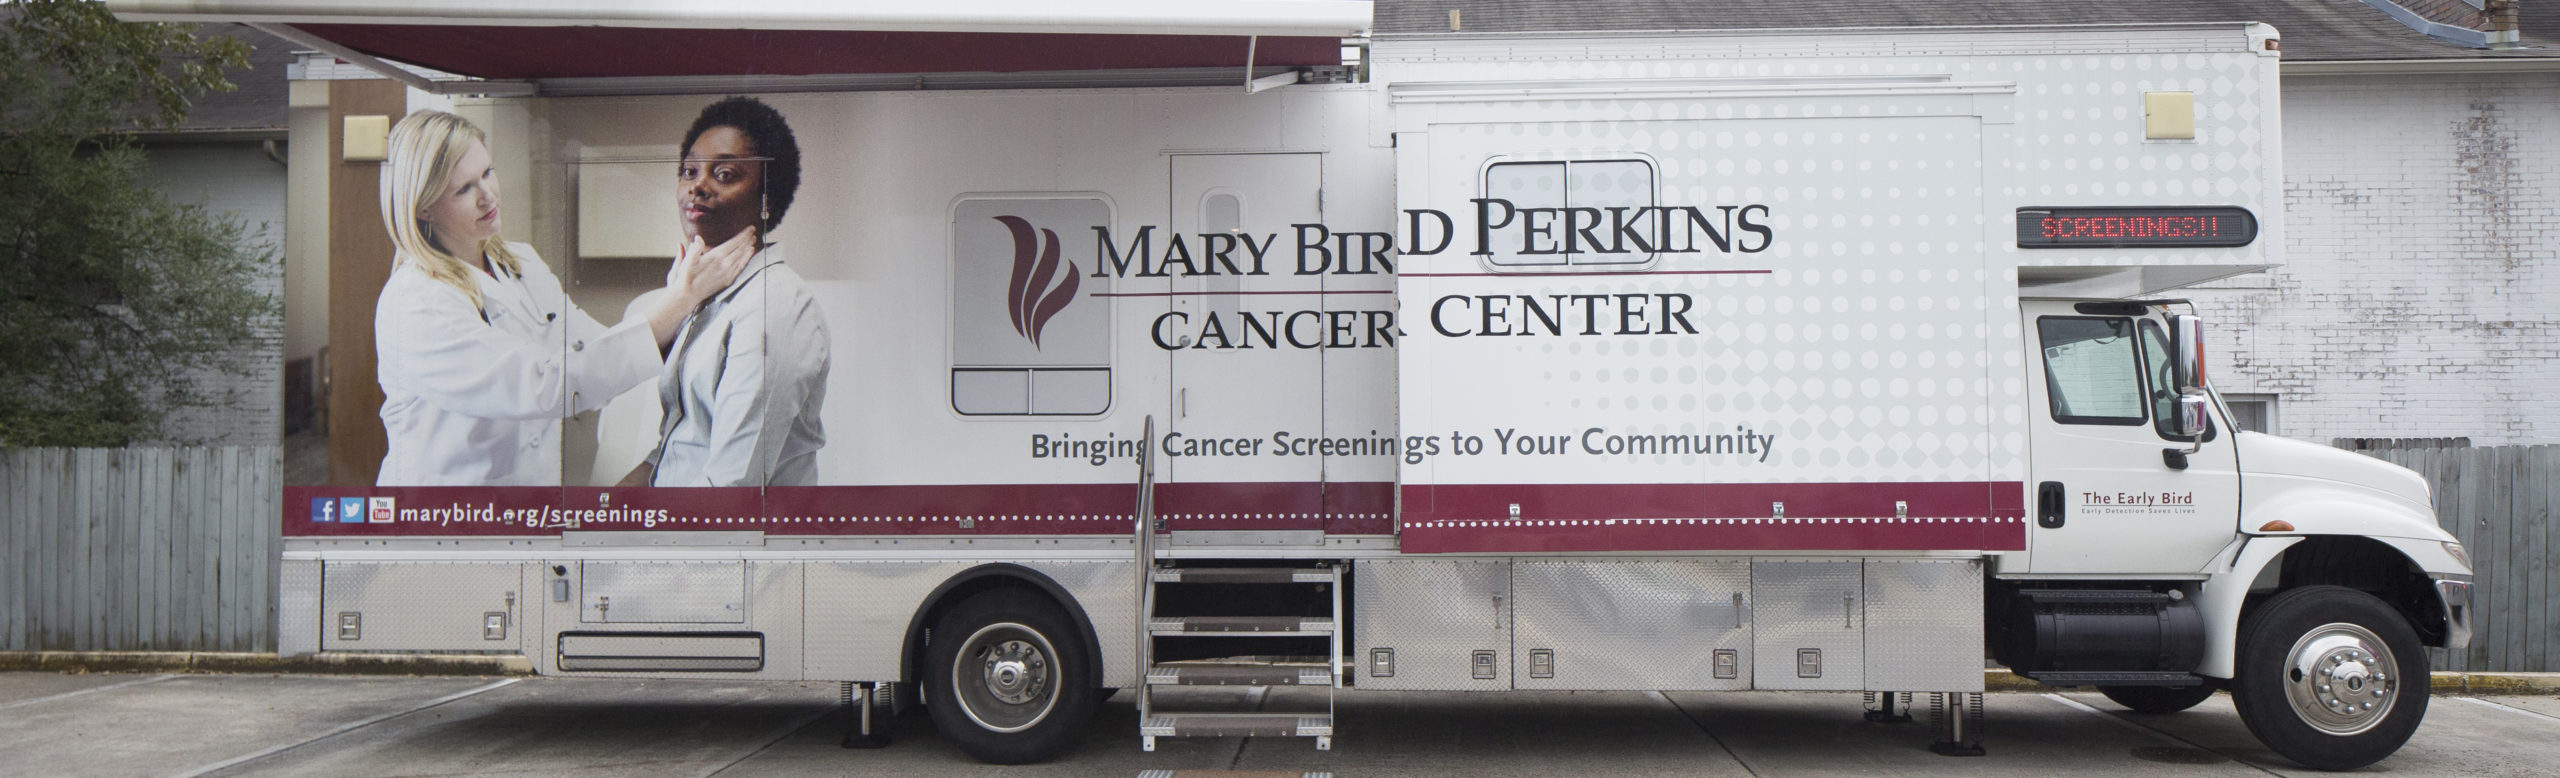 Mary Bird Perkins Mobile Cancer Screening Bus